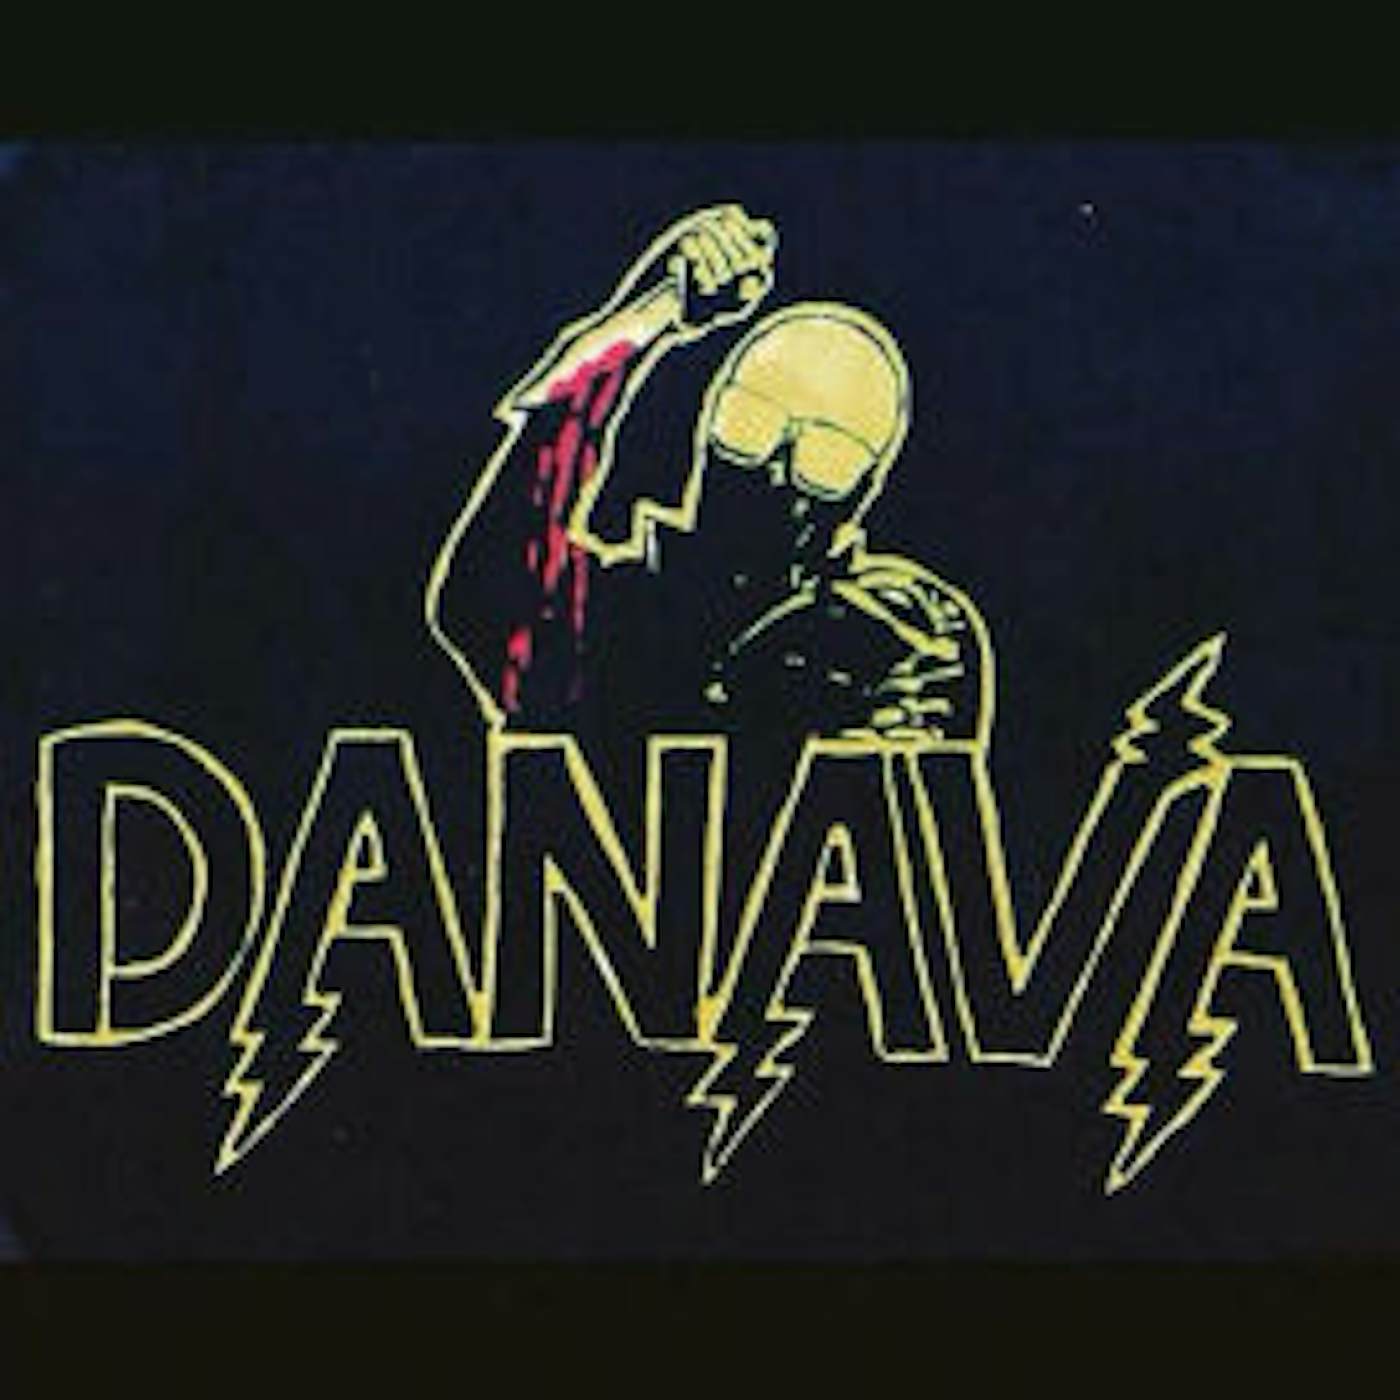 Danava At Midnight You Die Vinyl Record